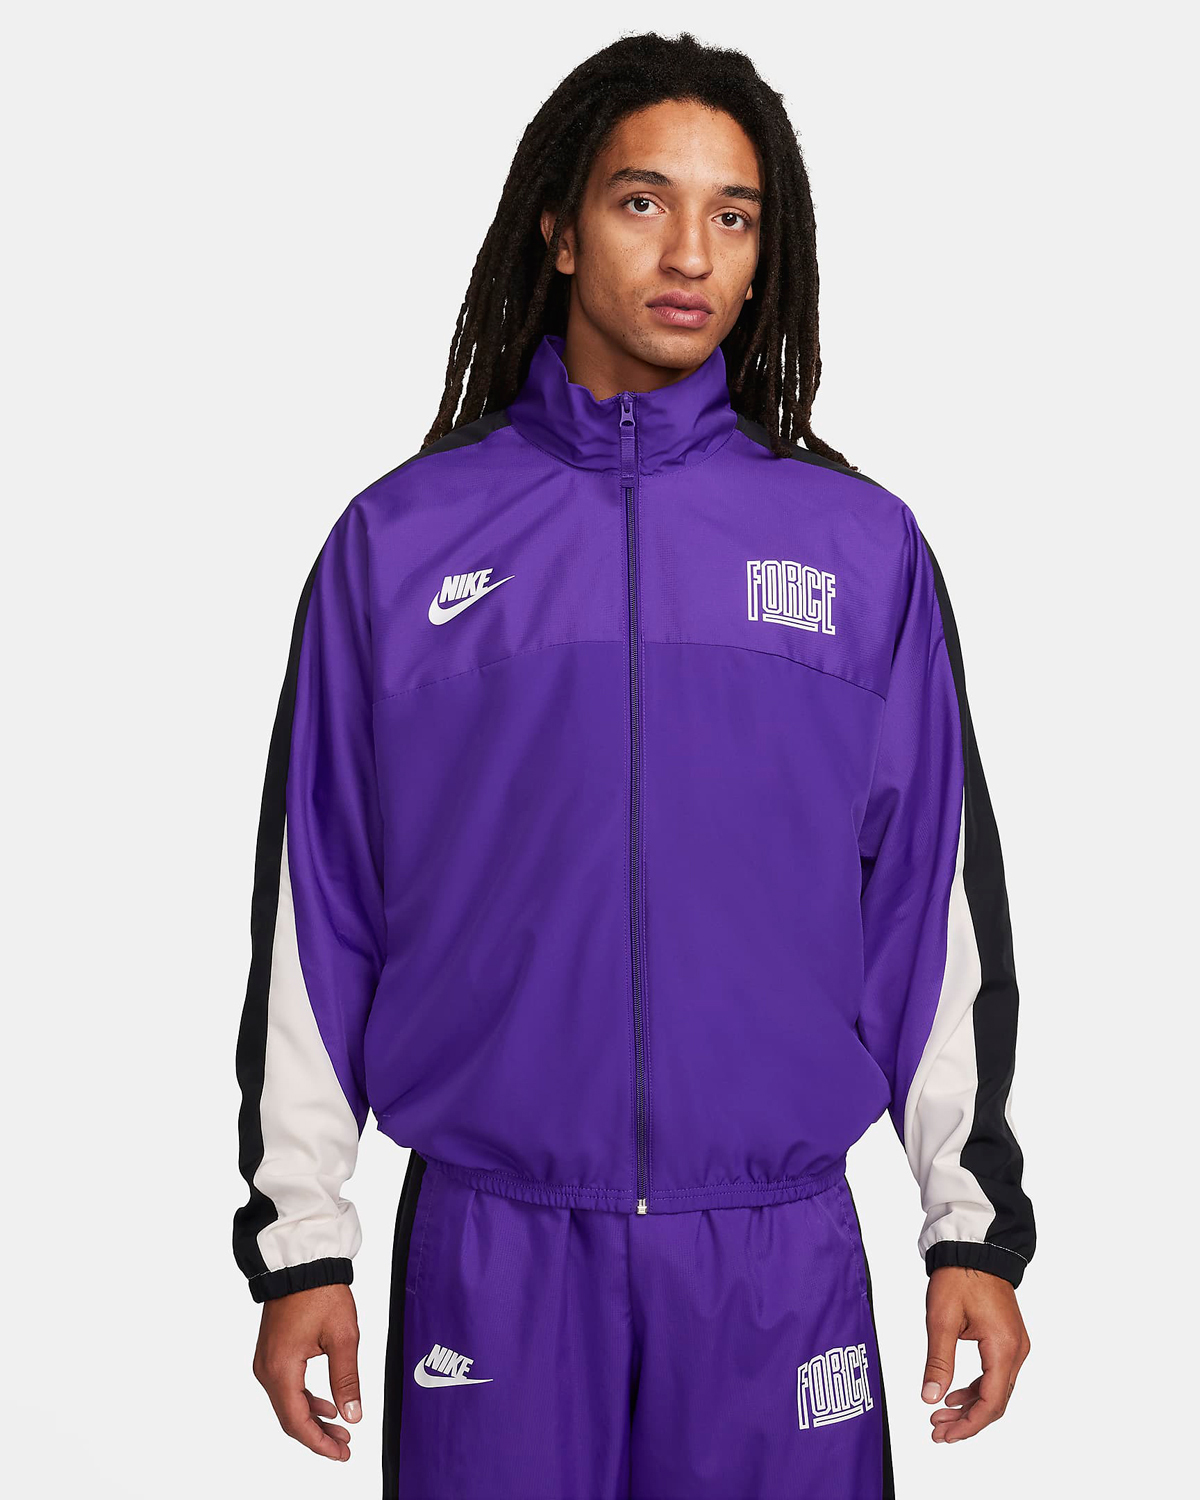 Nike-Starting-5-Basketball-Jacket-Field-Purple